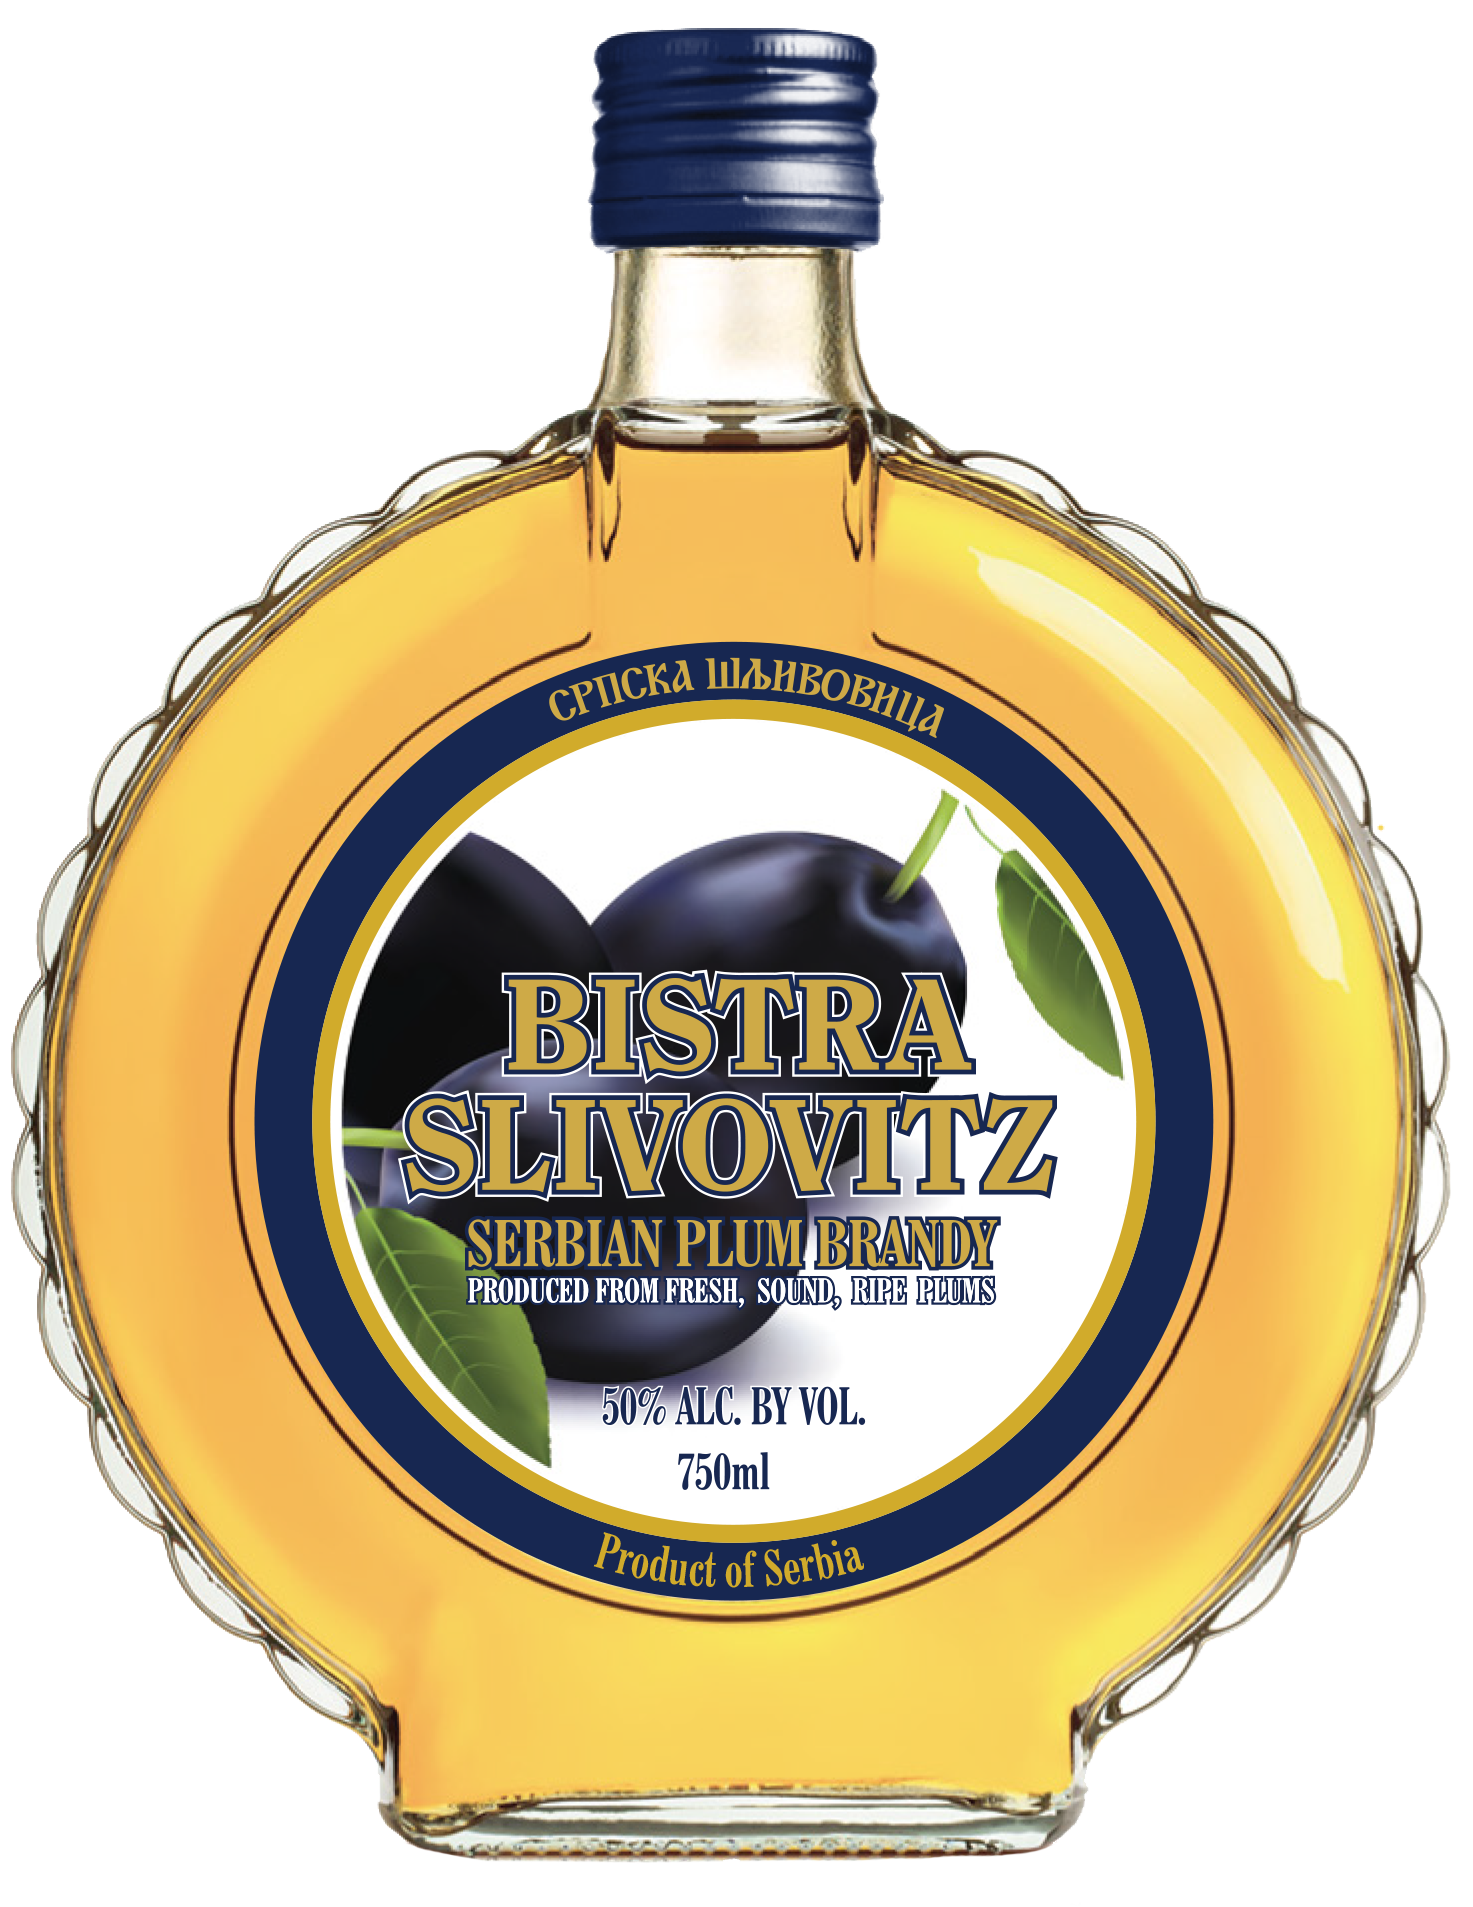 Bistra-Slivovitz